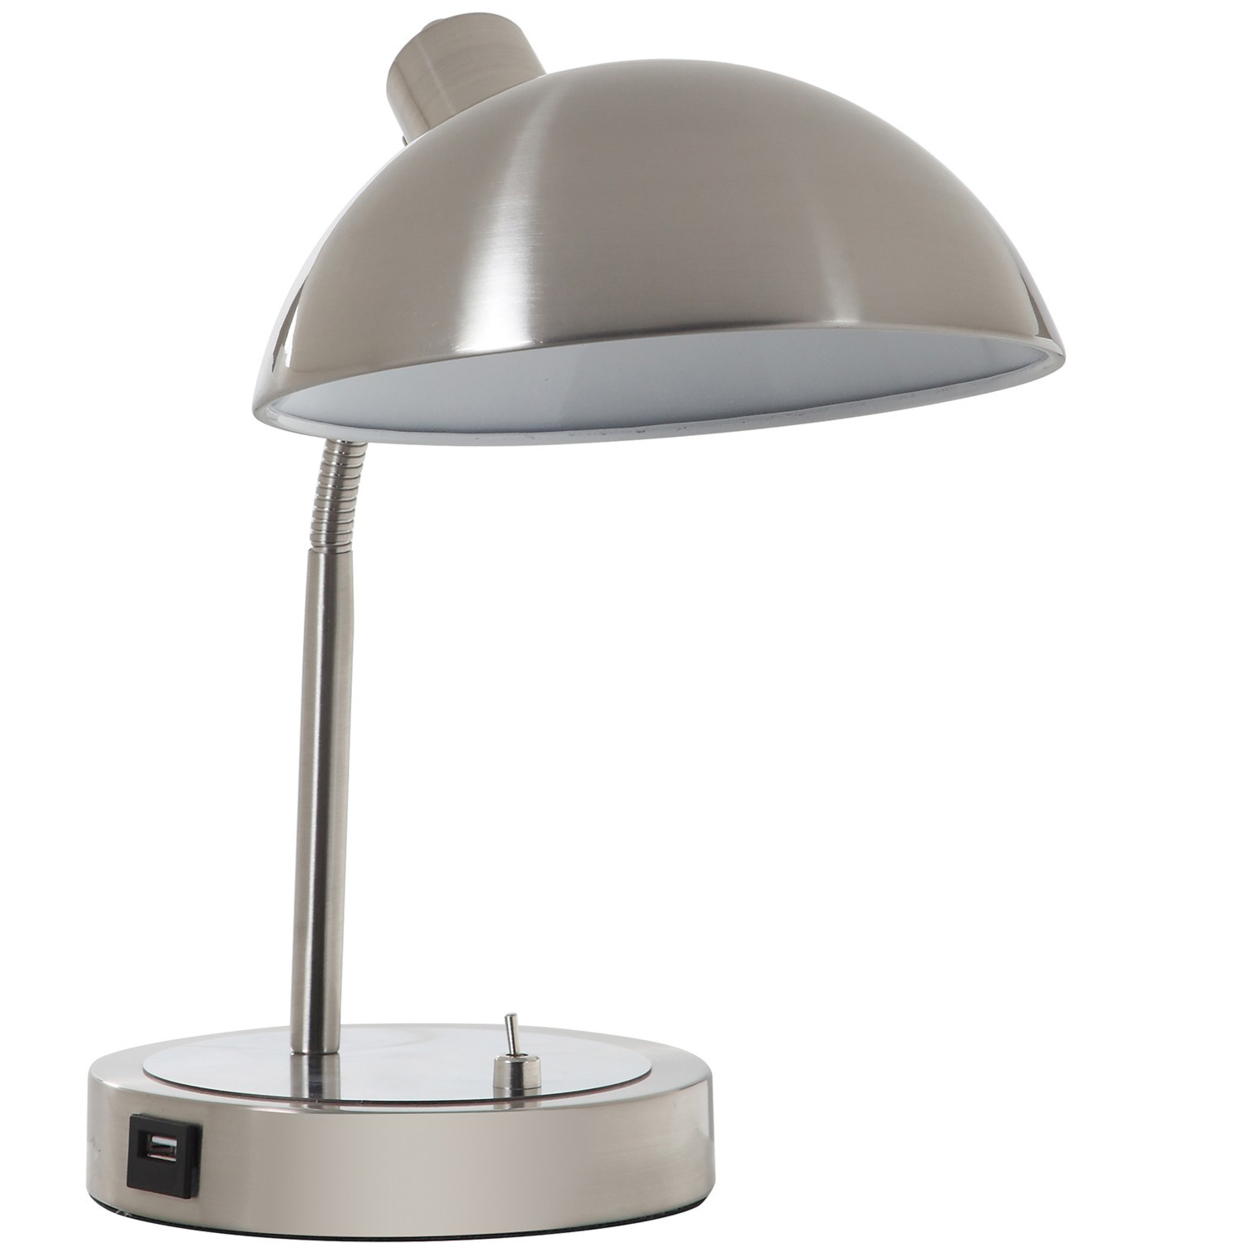 Desk Lamp With Adjustable Head And USB Port, Brushed Nickel- Saltoro Sherpi